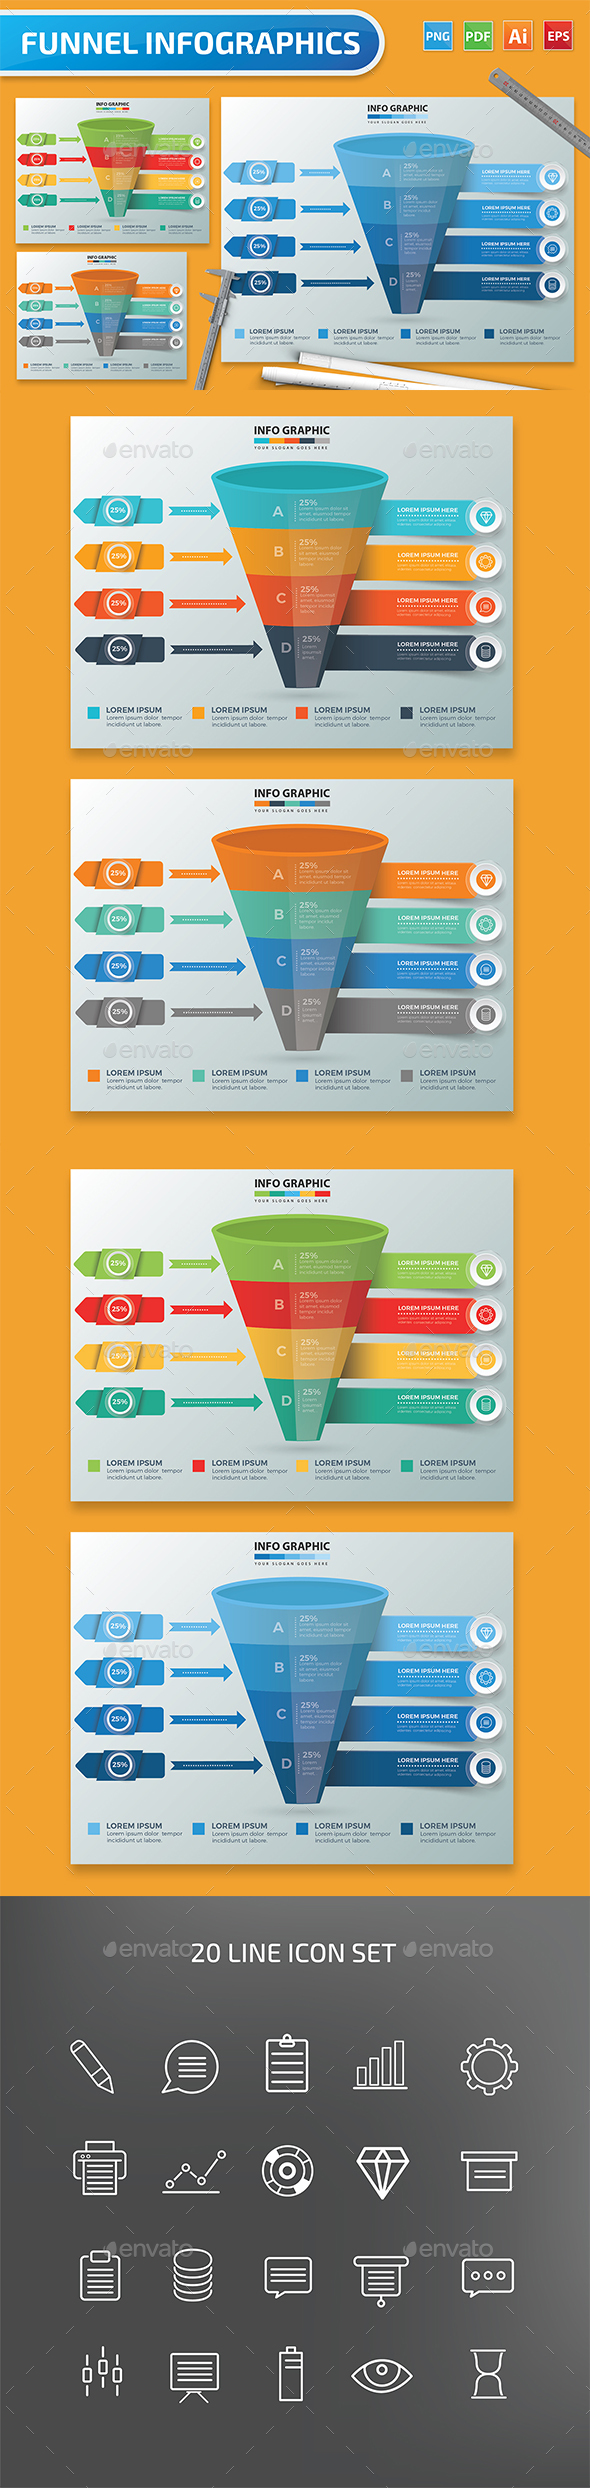 Funnel Infographic Design